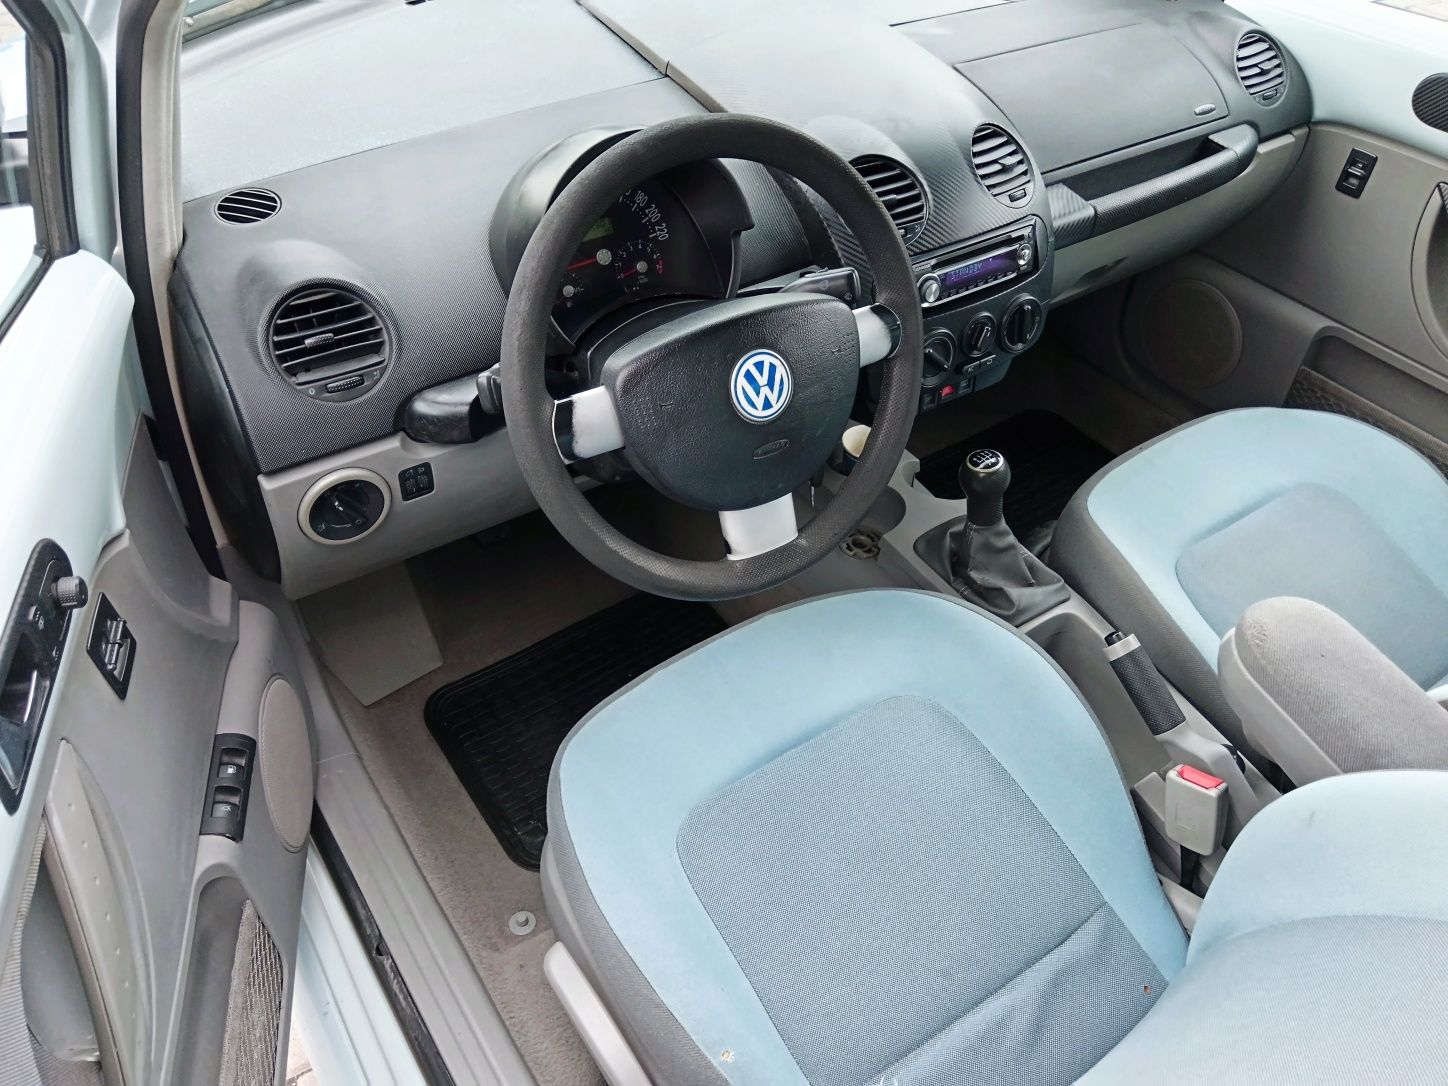 VW New Beetle , proprietar in acte  , aer conditionat funcțional